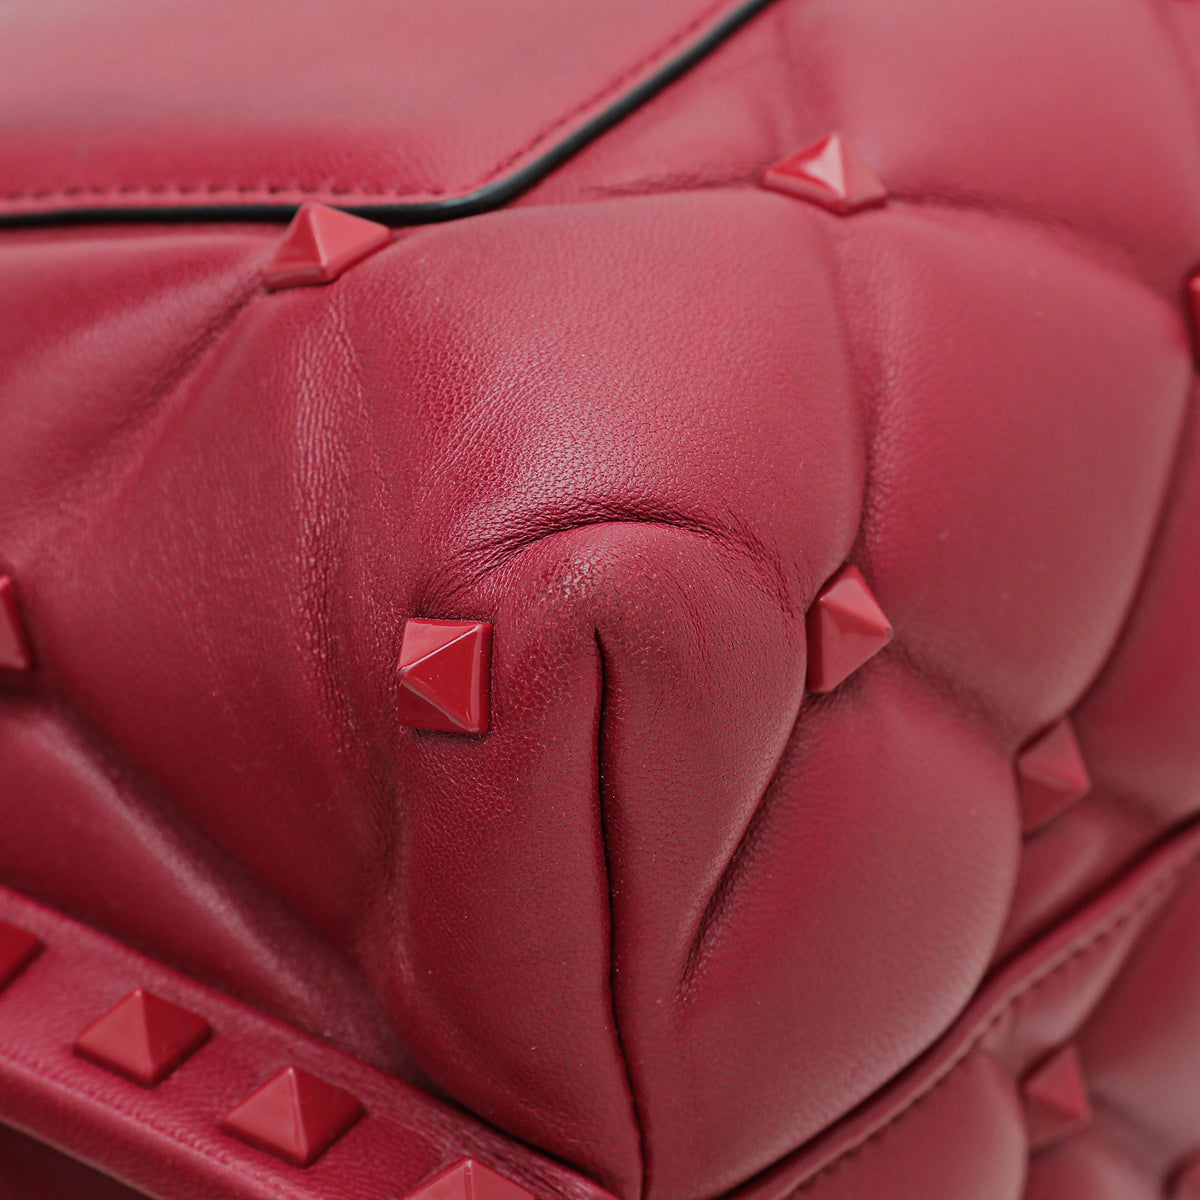 Valentino Red Candystud Top Handle Medium Bag – The Closet